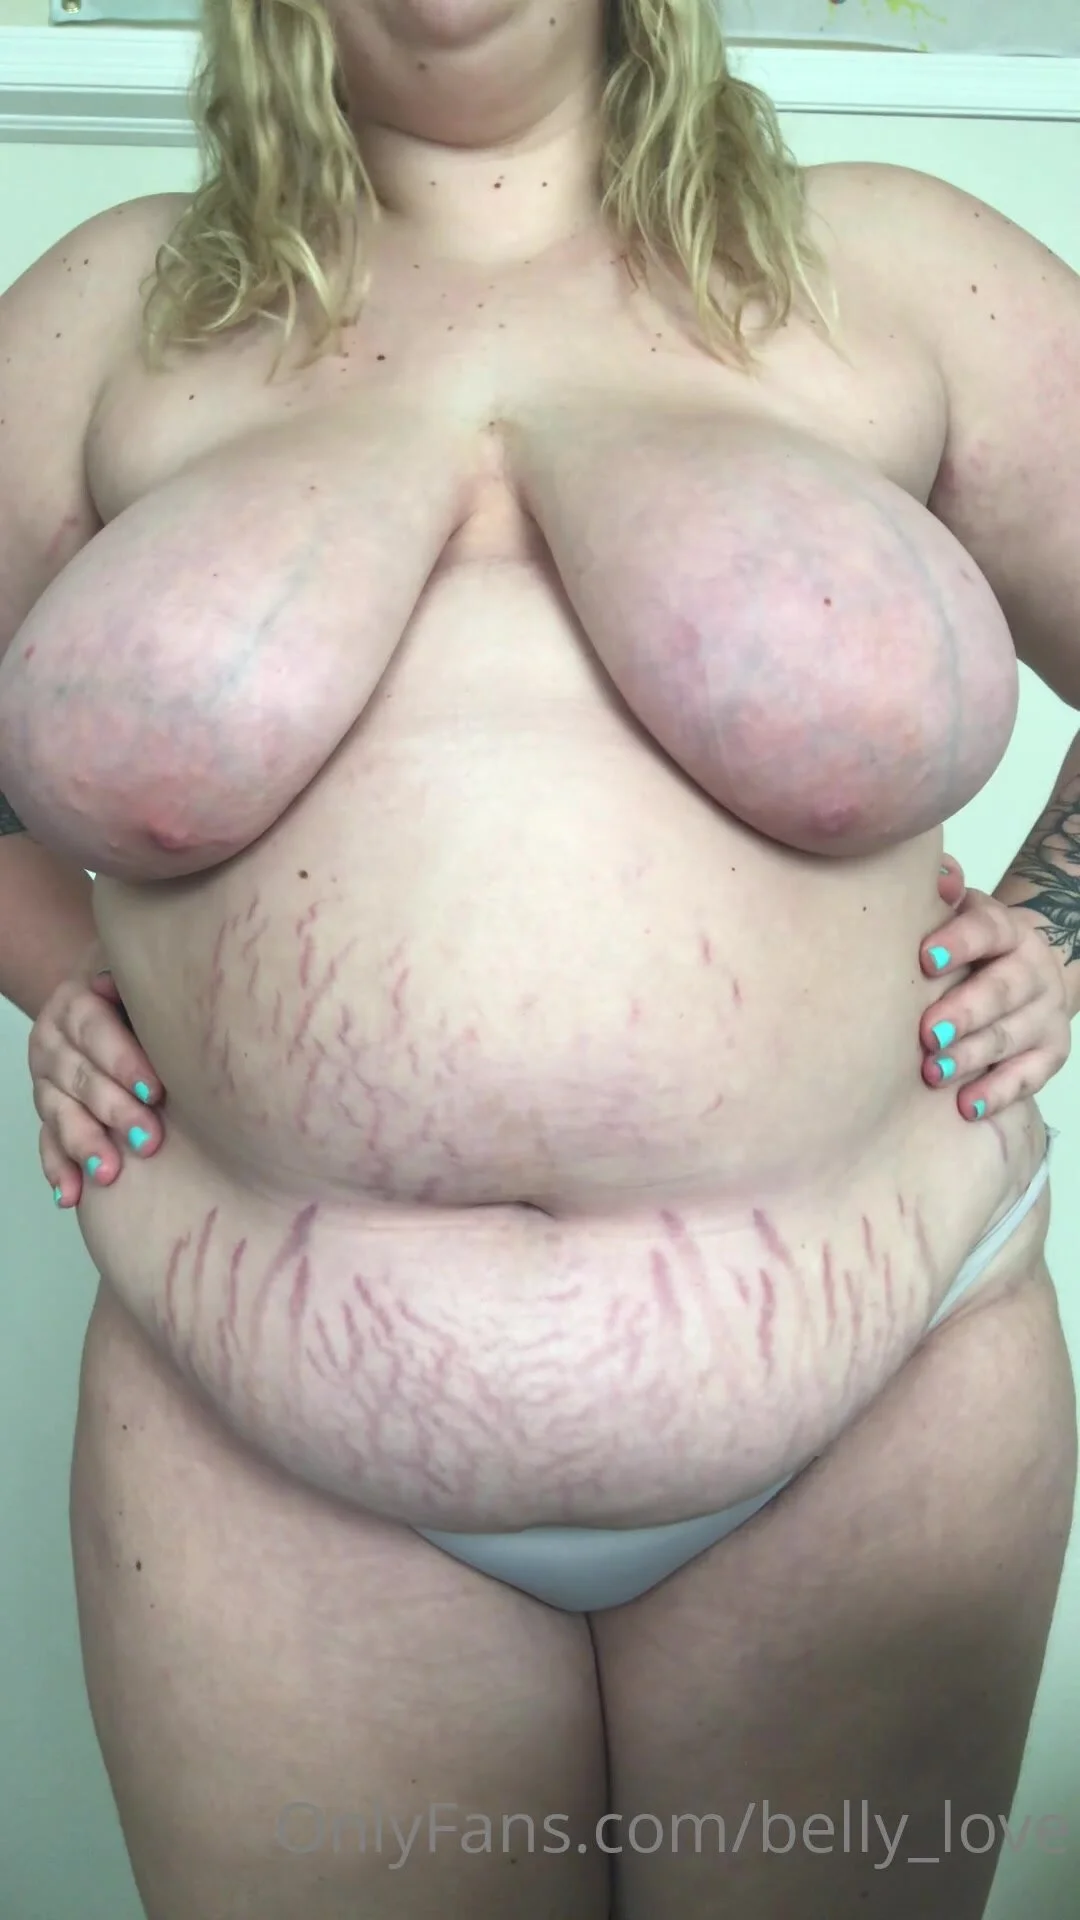 Fat Girl Nude Com - Fat girl stretch marks 4 - ThisVid.com